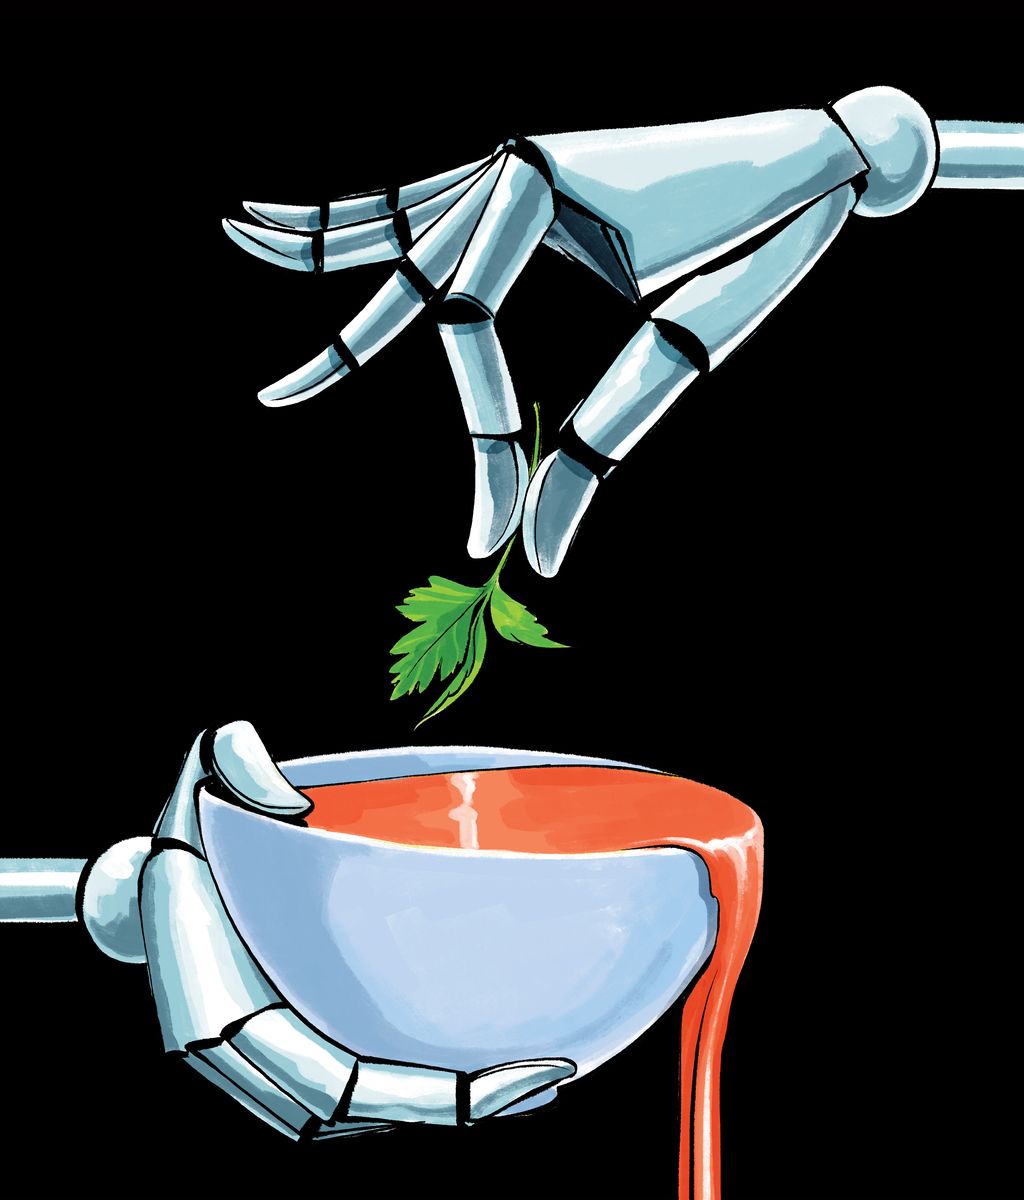 http://pixel.nymag.com/imgs/daily/grub/2017/01/09/robot-chef/09-robot-chef-lede.w512.h600.2x.jpg